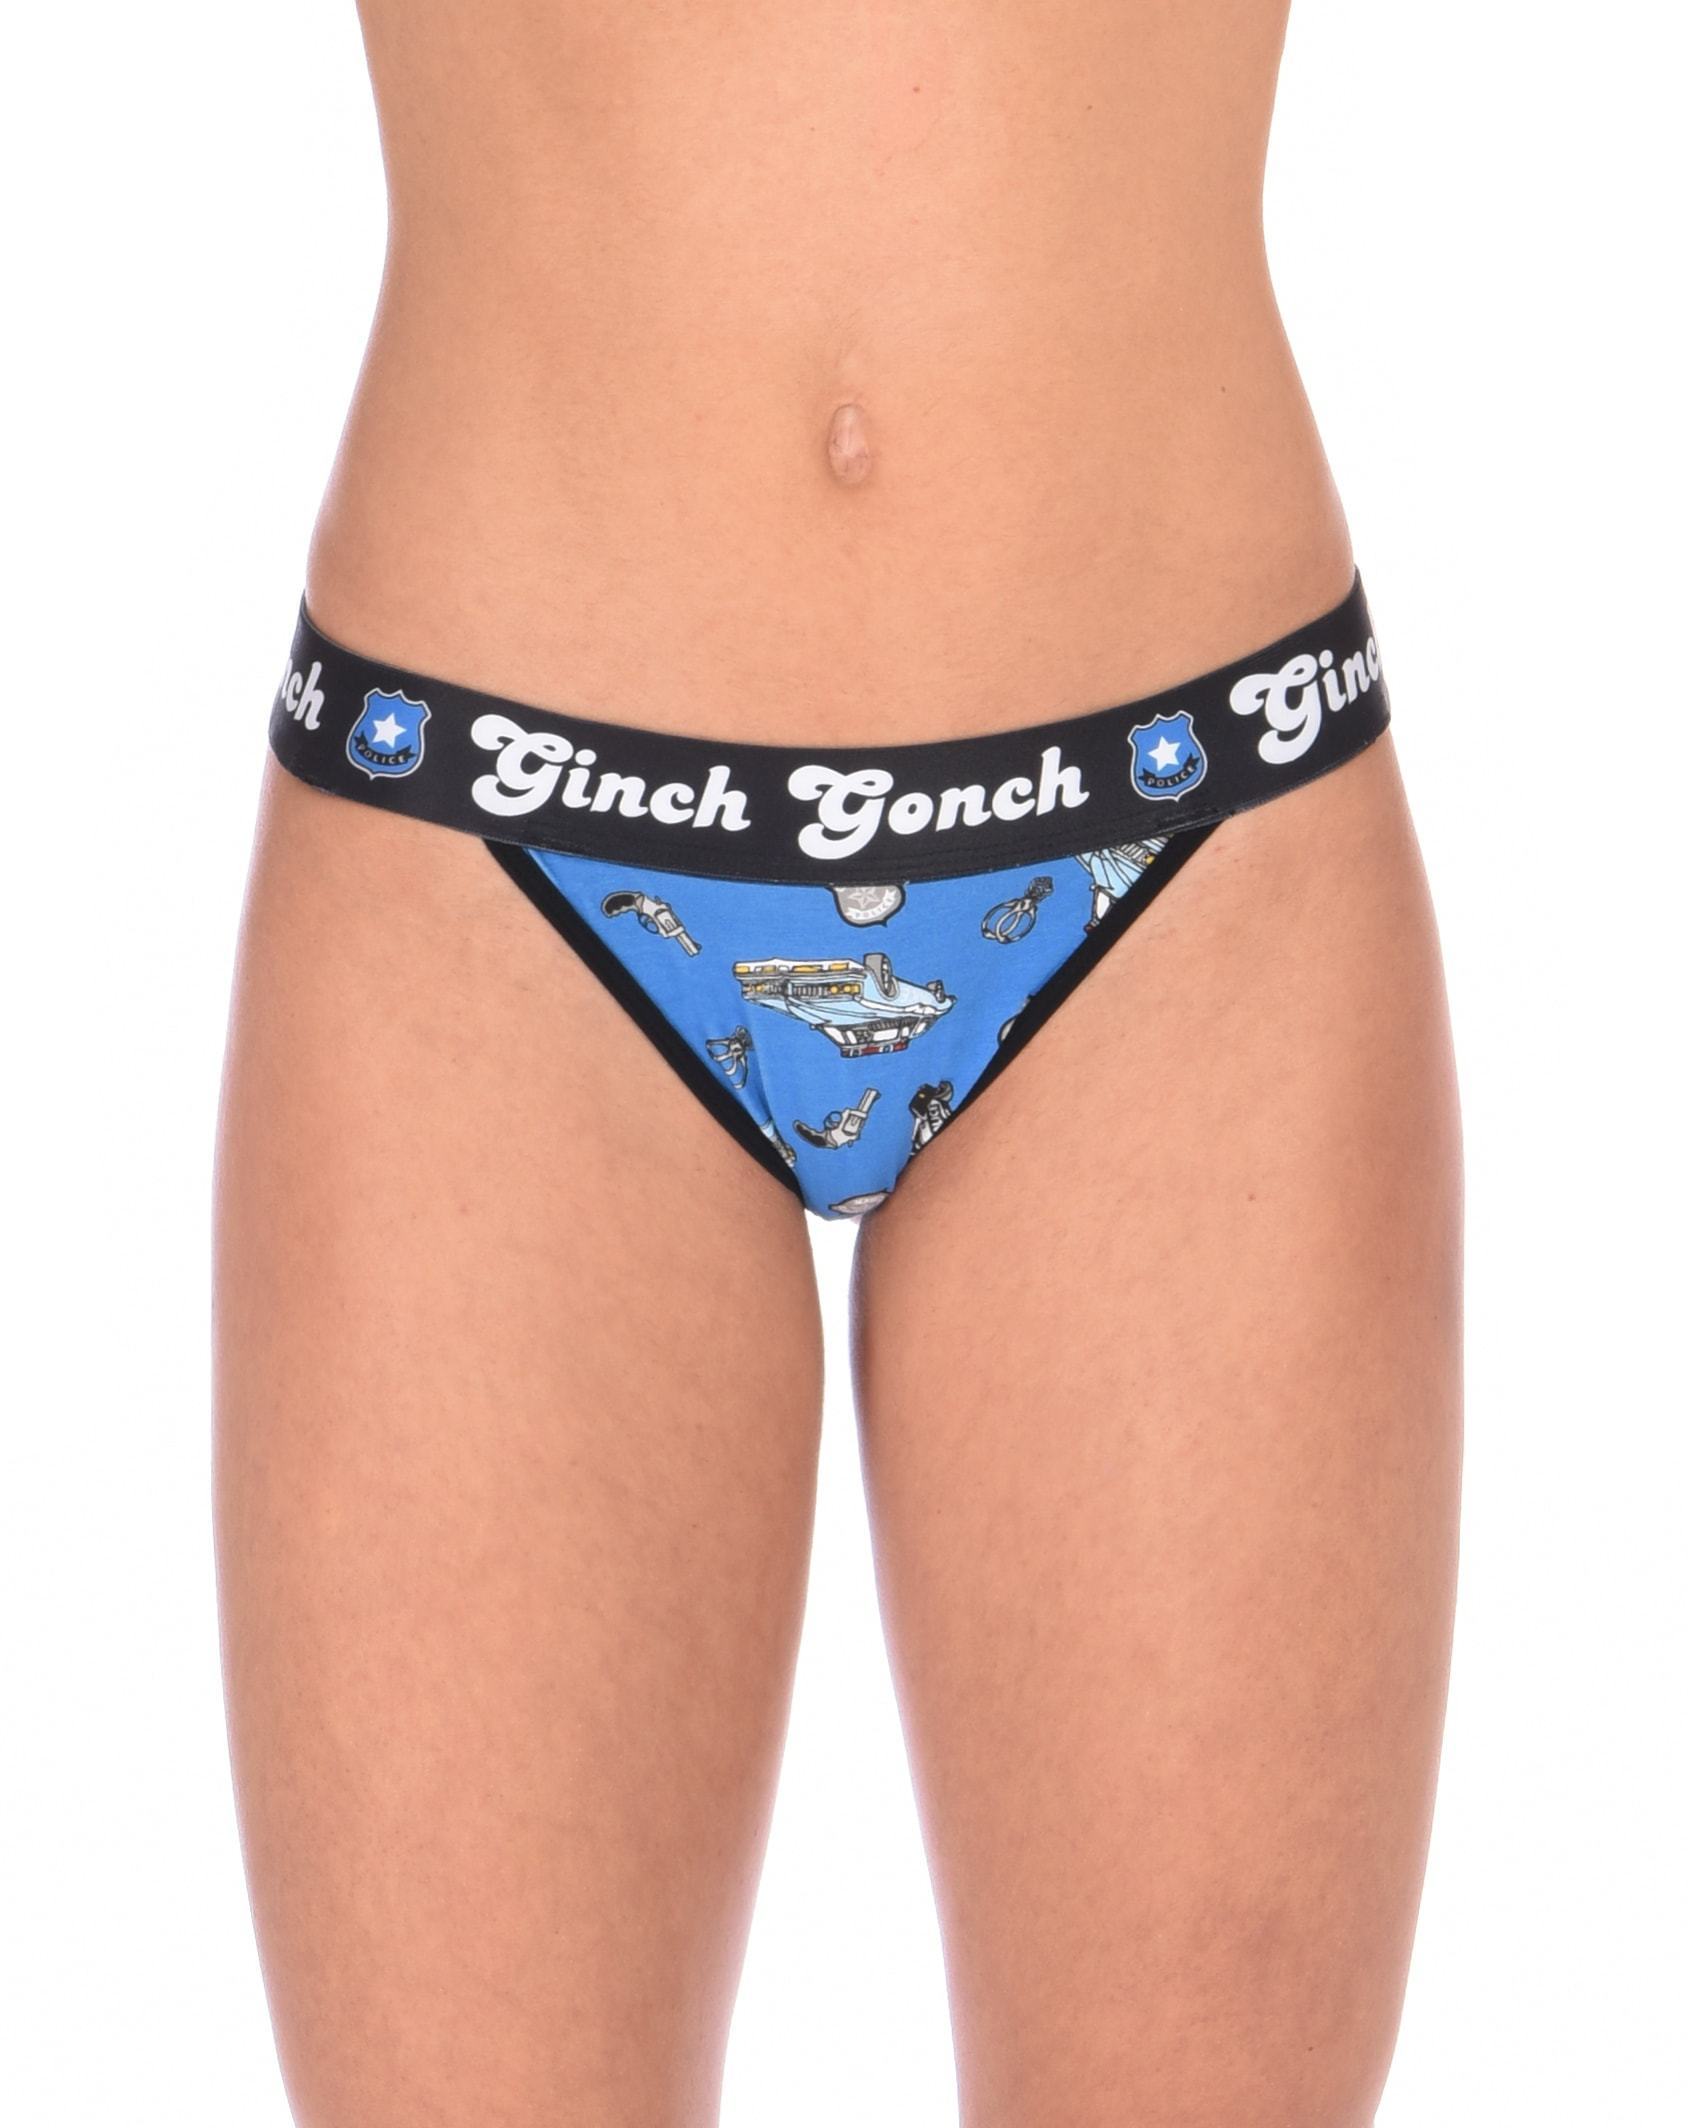 GG Patrol Thong Underwear – Ginch Gonch